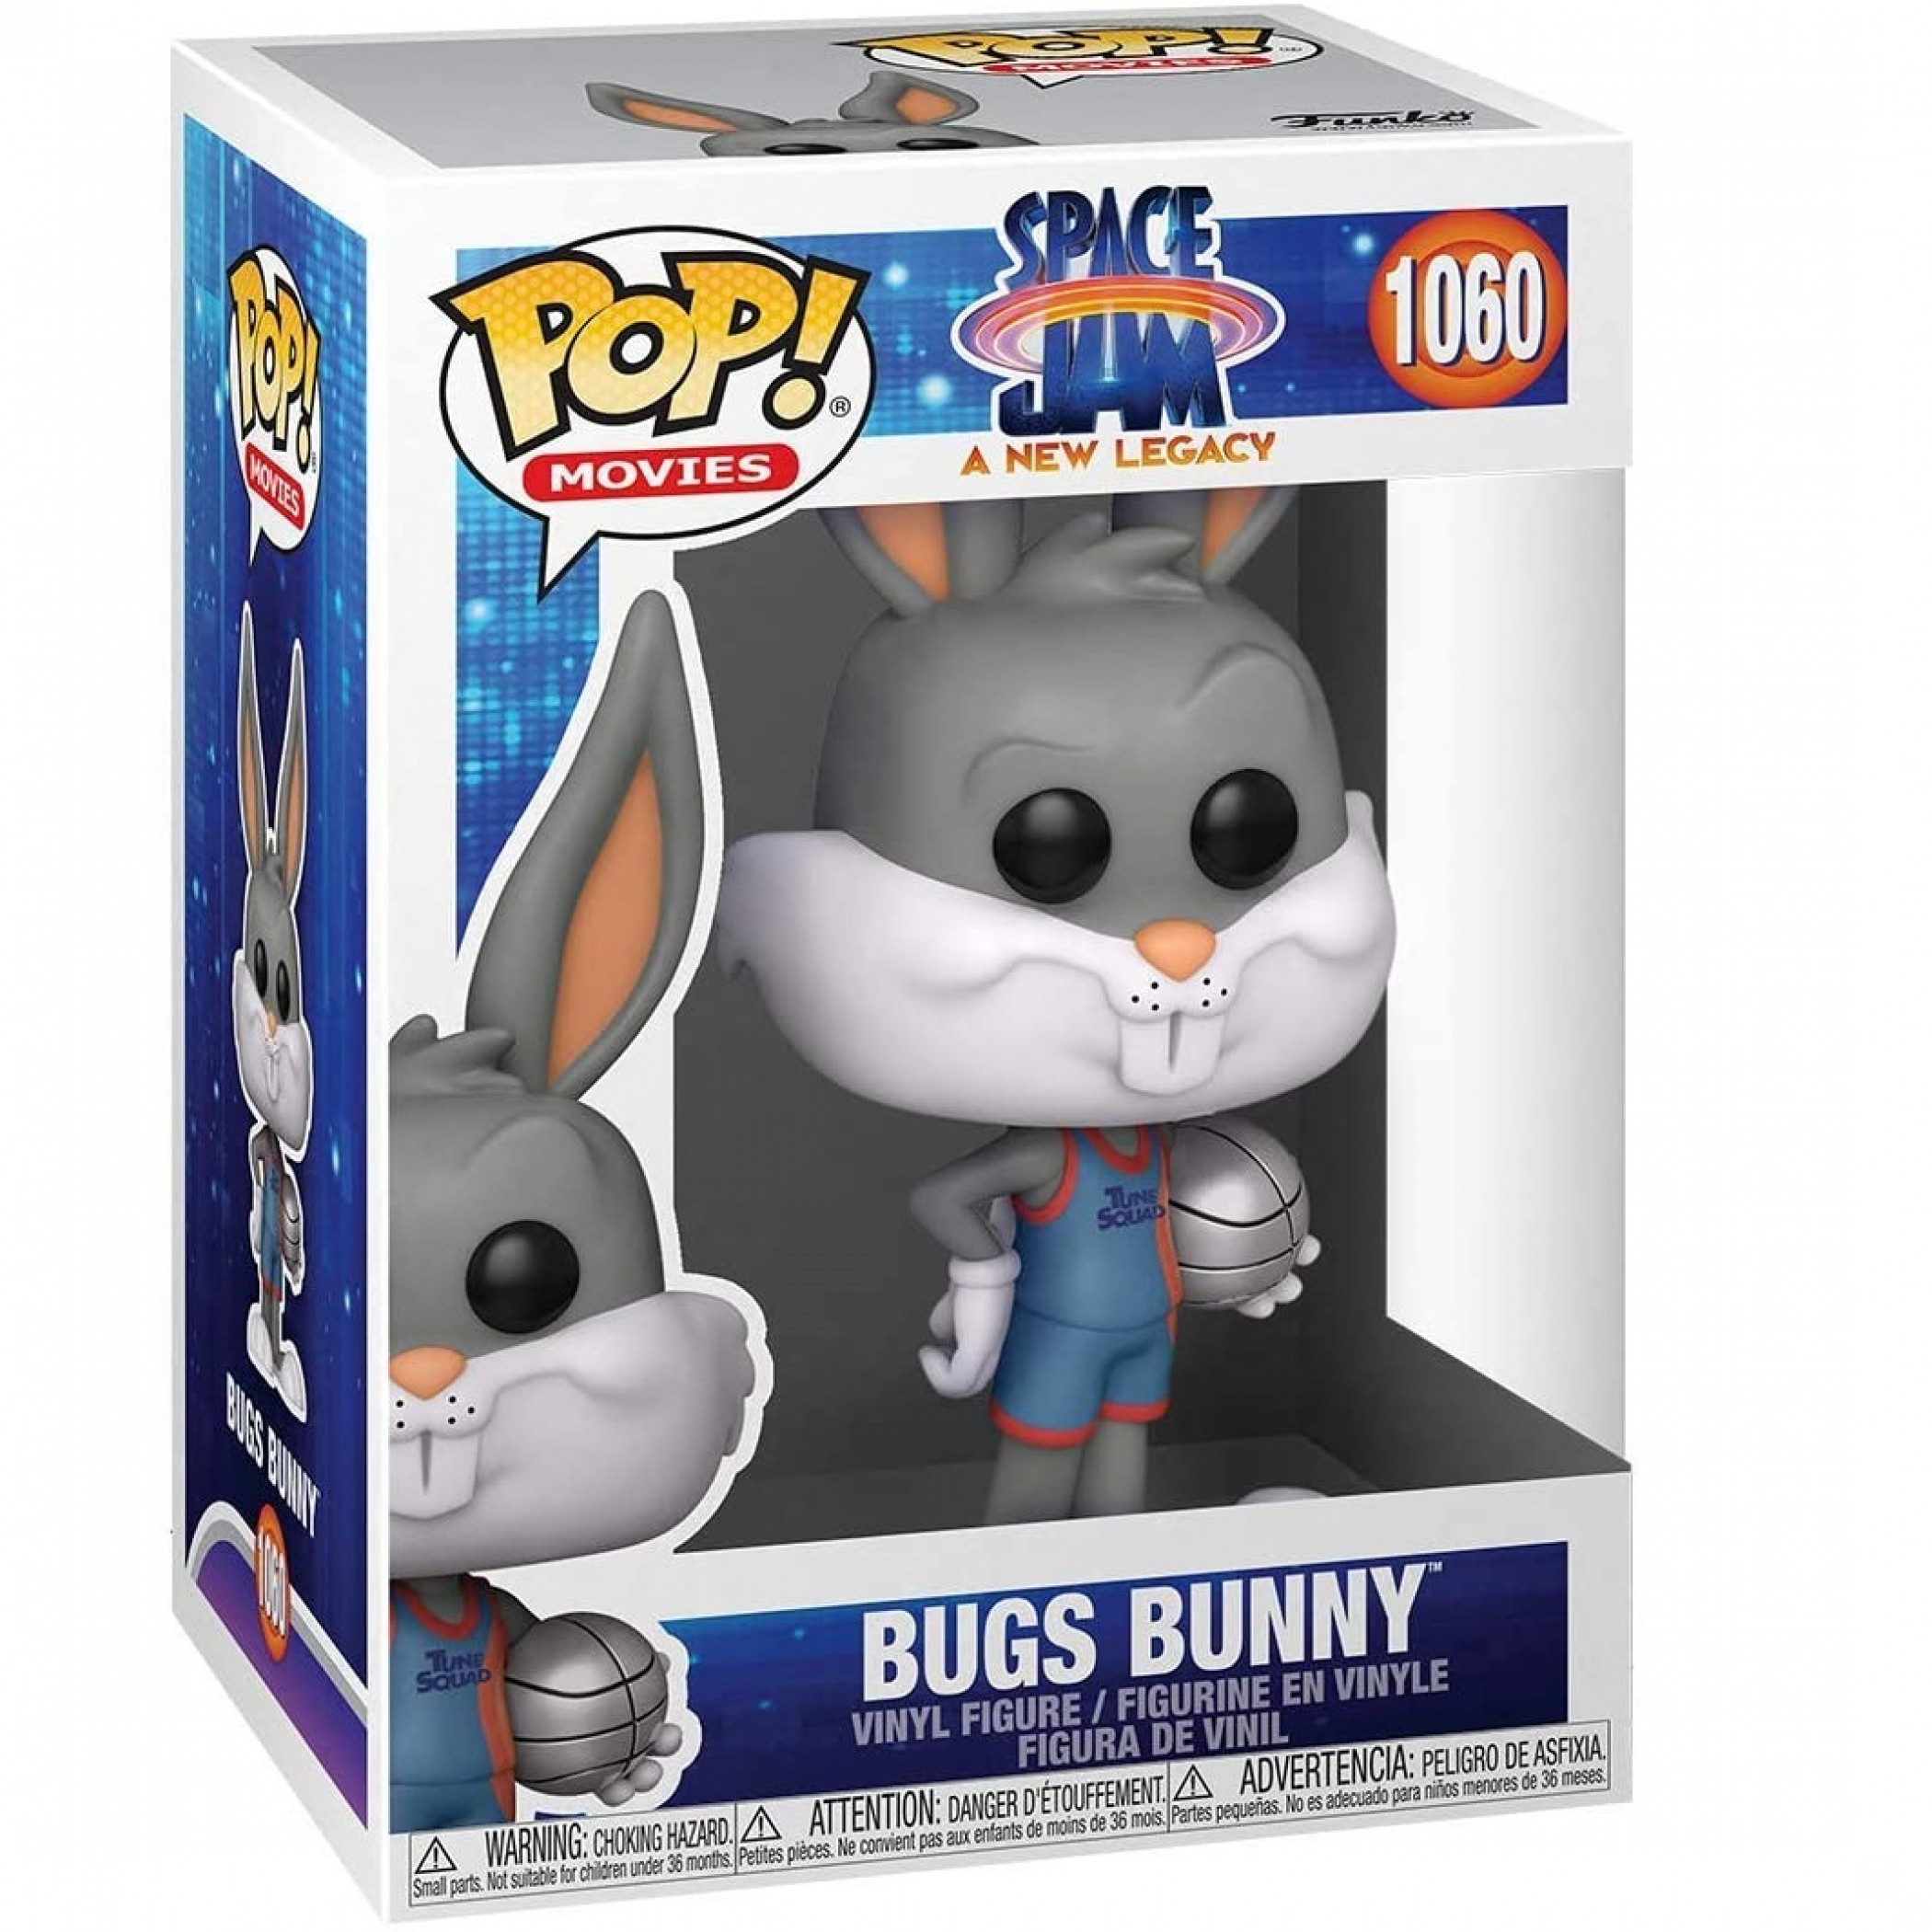 Space Jam Bugs Bunny Funko Pop! Movies Vinyl Figure